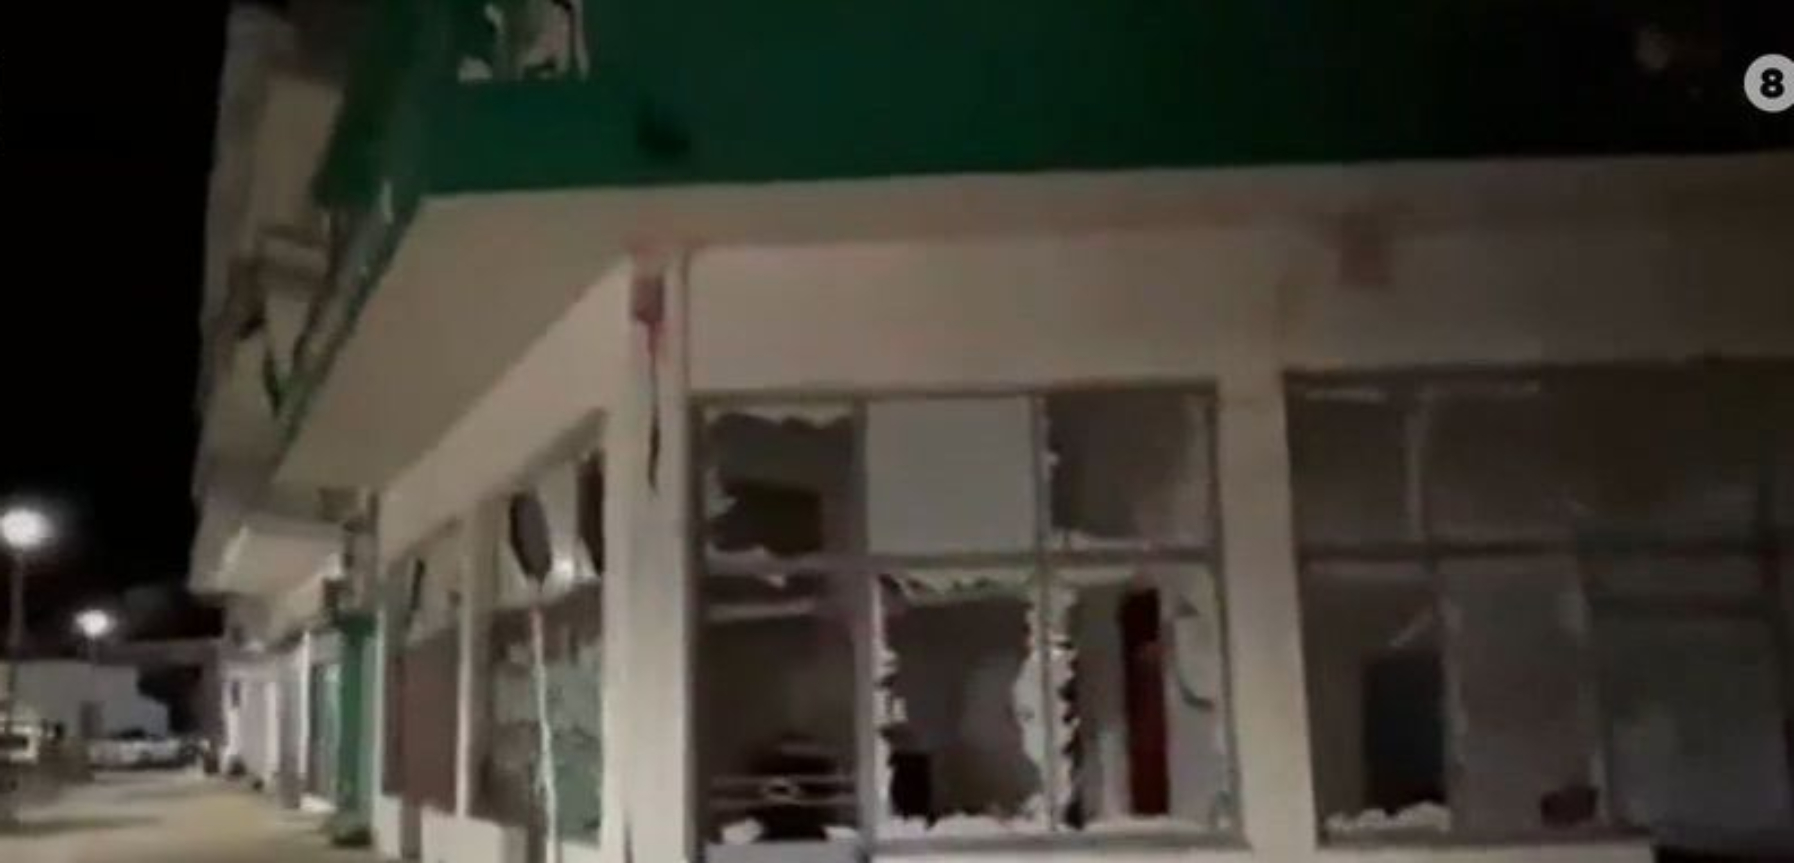 VIDEO-ντοκουμέντο από την ισχυρή έκρηξη σε σύνδεσμο του Παναθηναϊκού